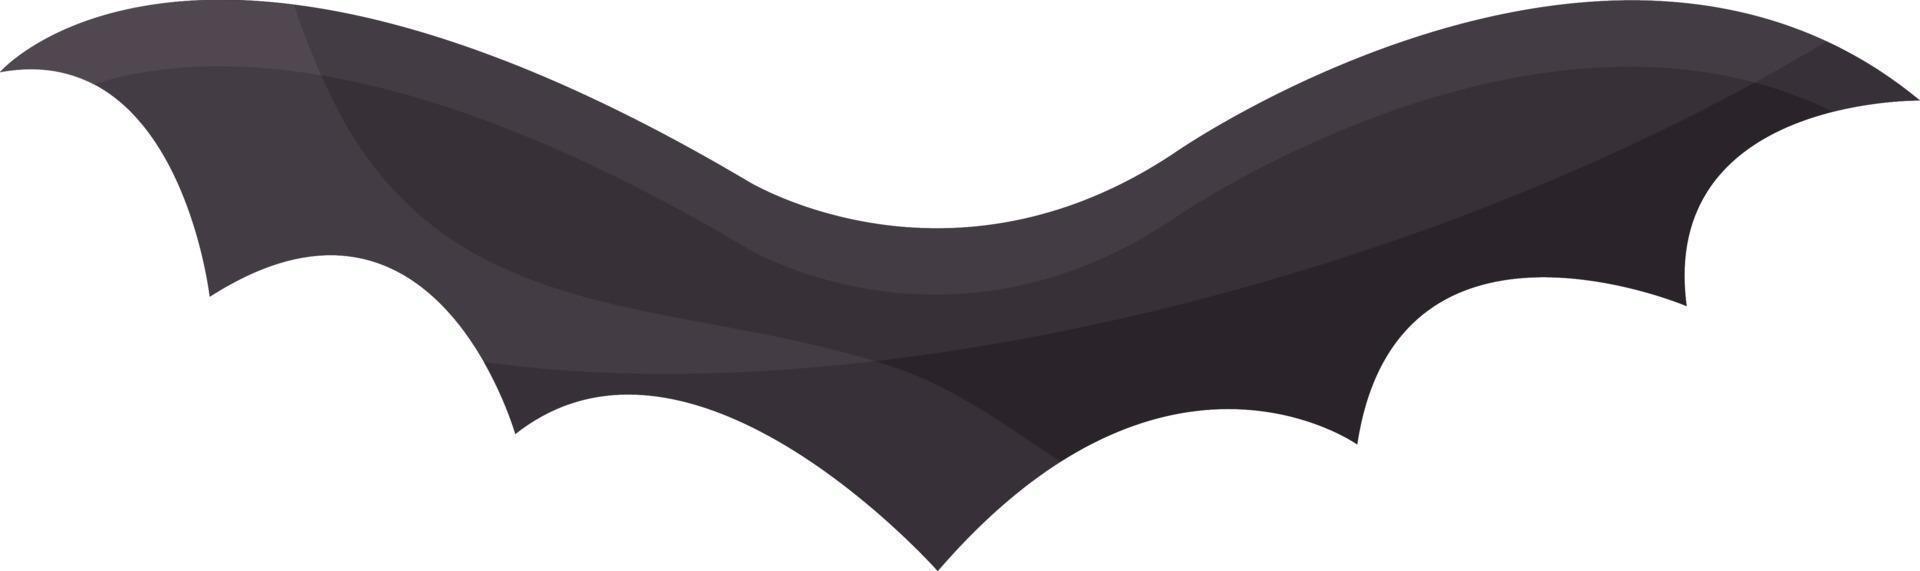 simple ilustración de una silueta de murciélago, murciélago negro, halloween, clipart vectorial, sin antecedentes vector